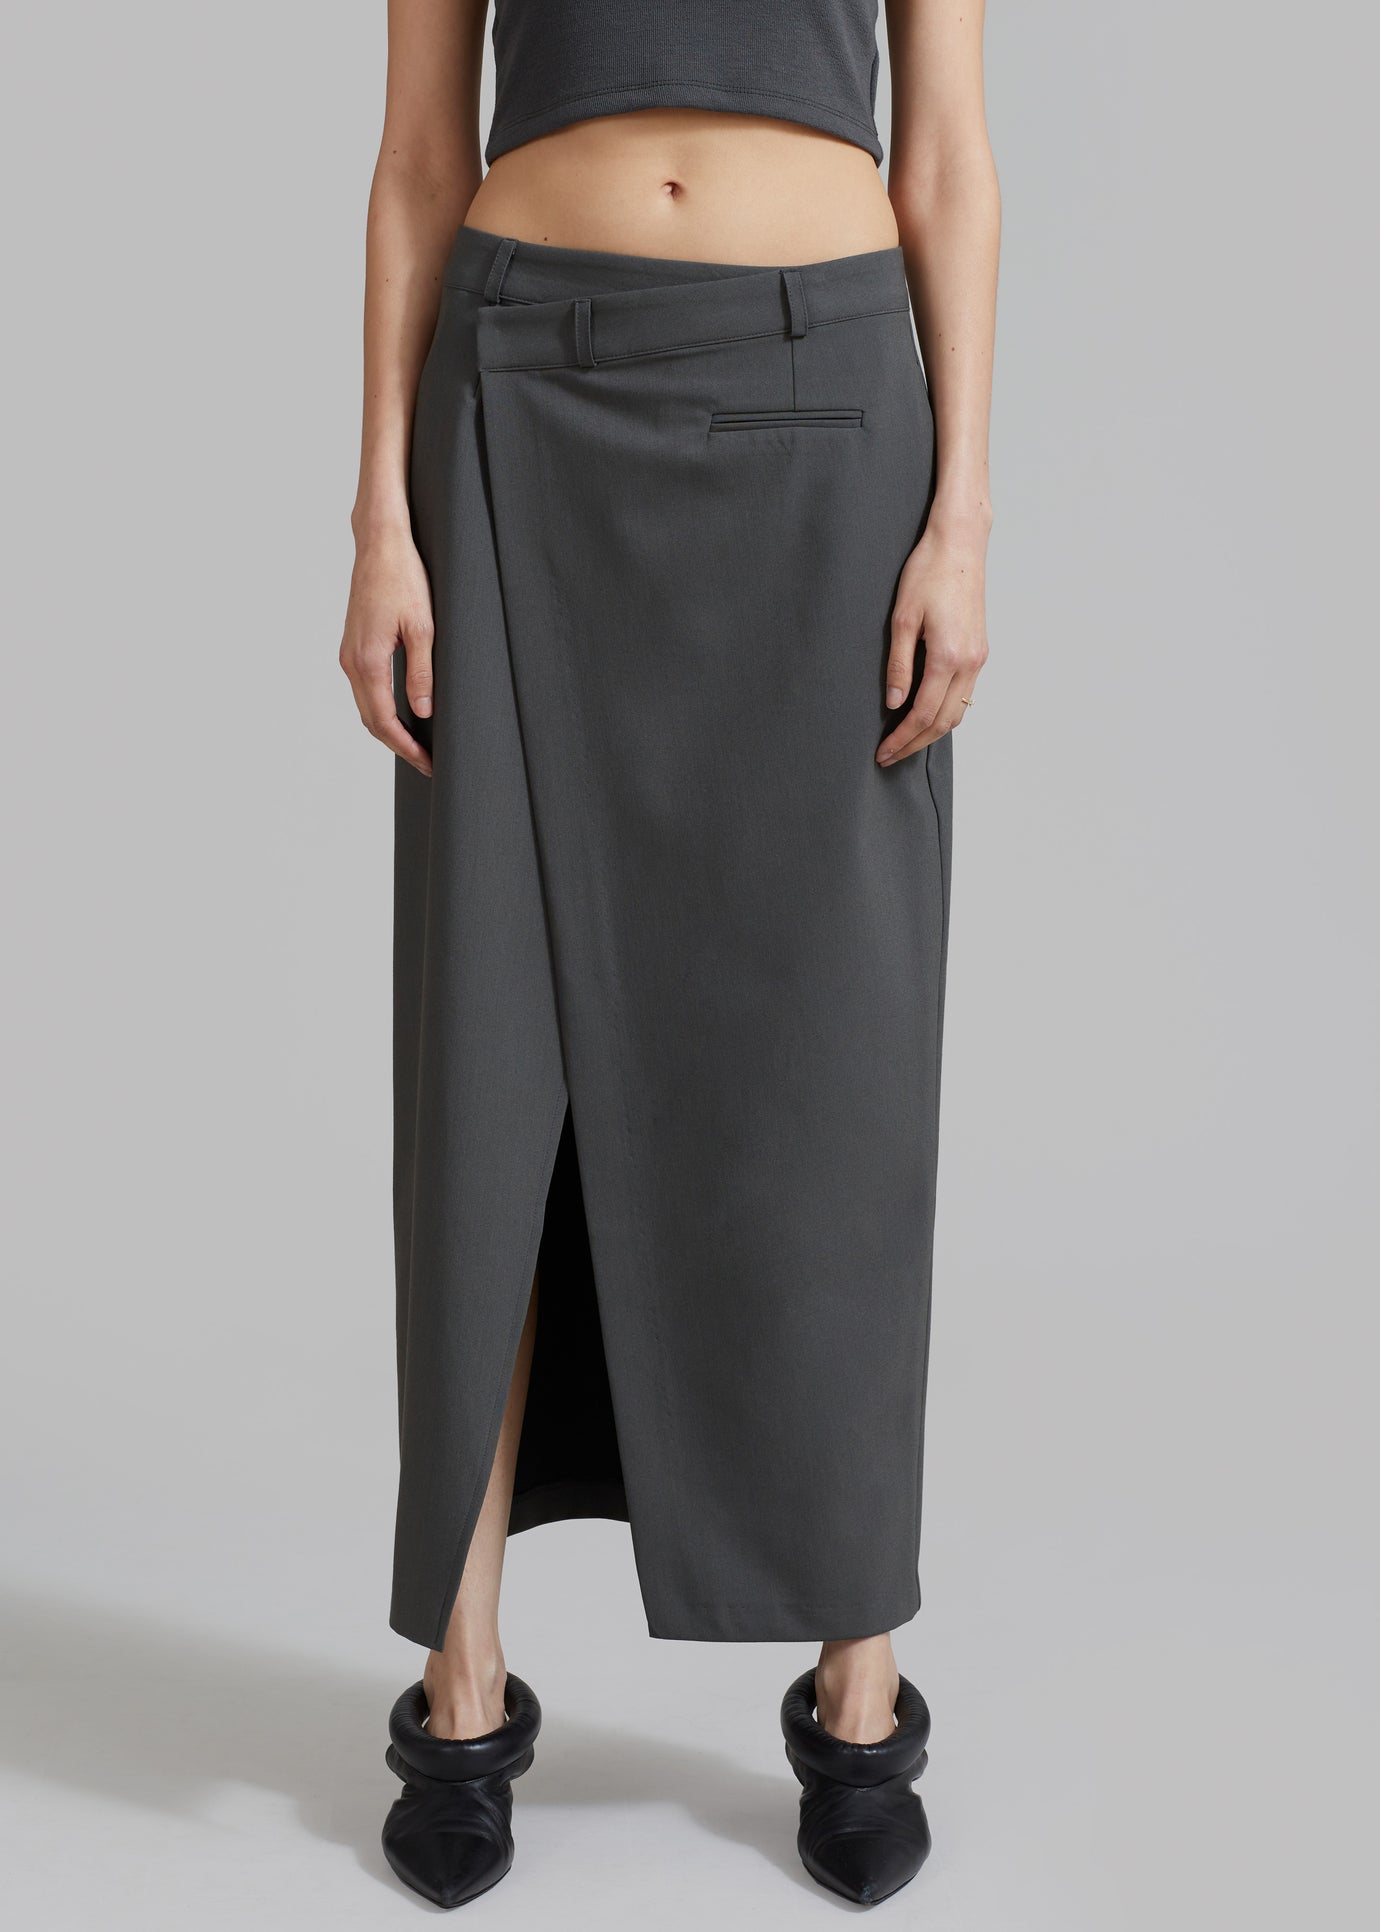 Annabel Asymmetric Midi Skirt - Grey